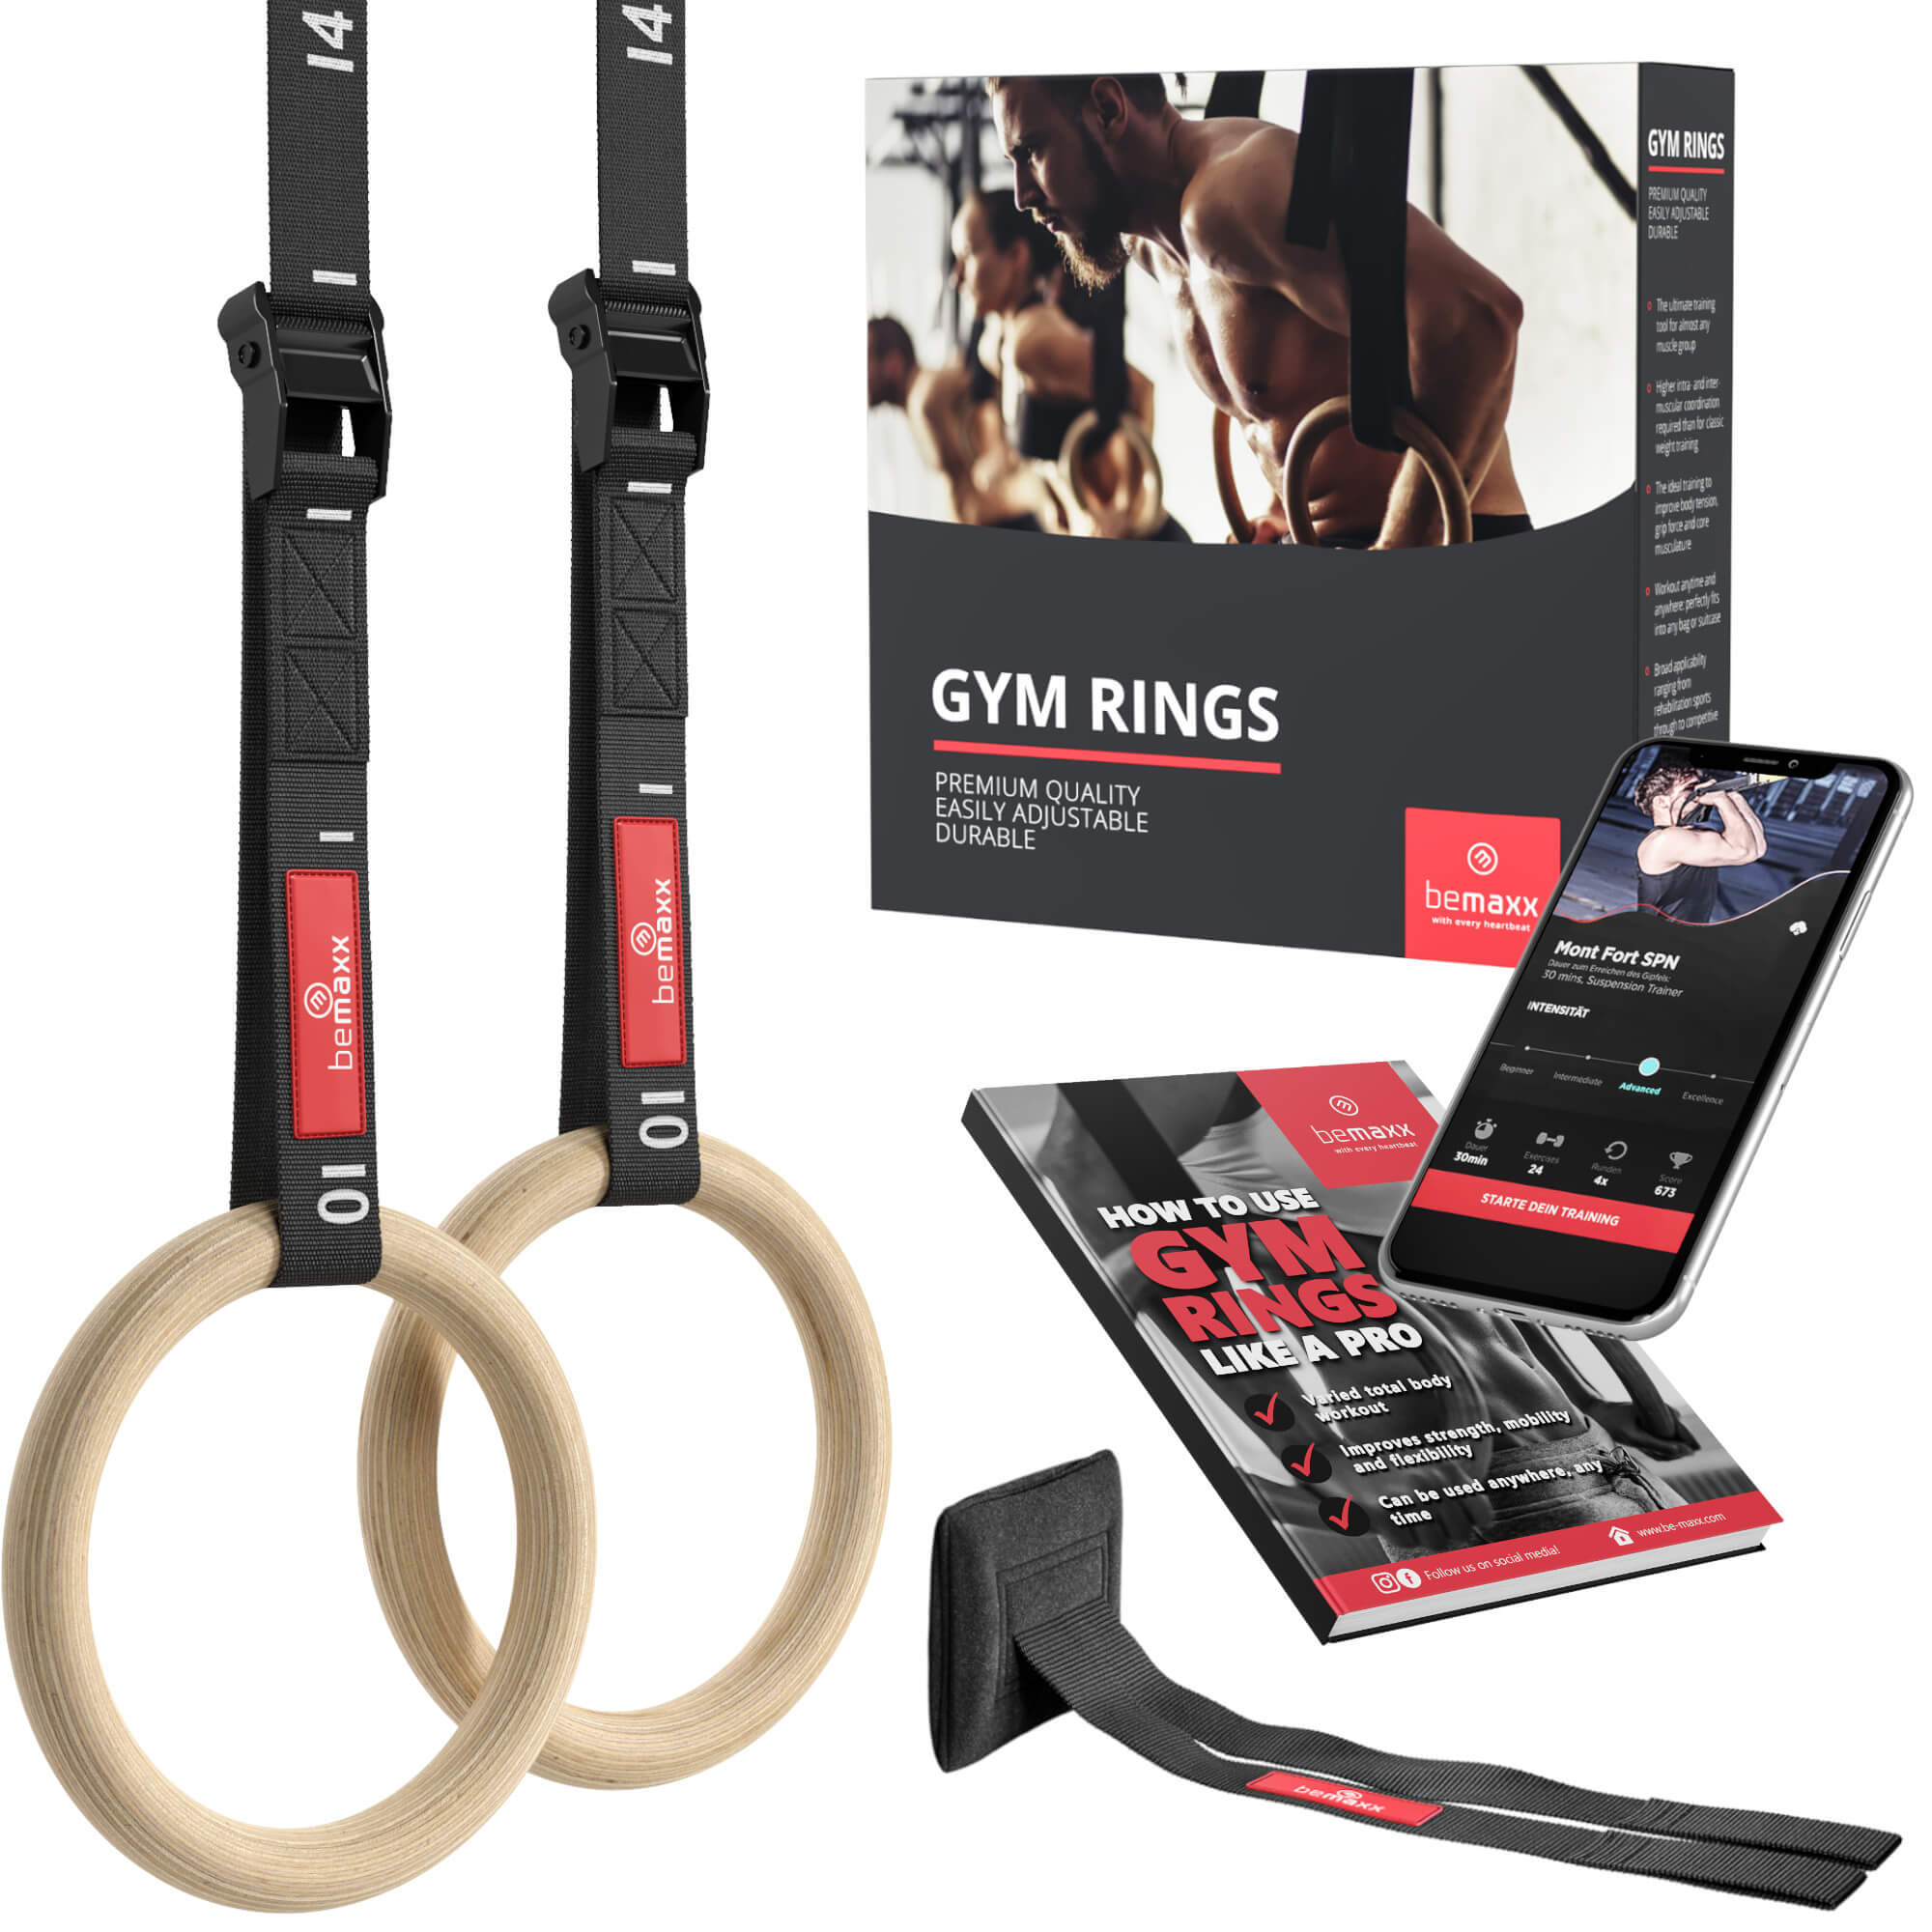 Gym Rings